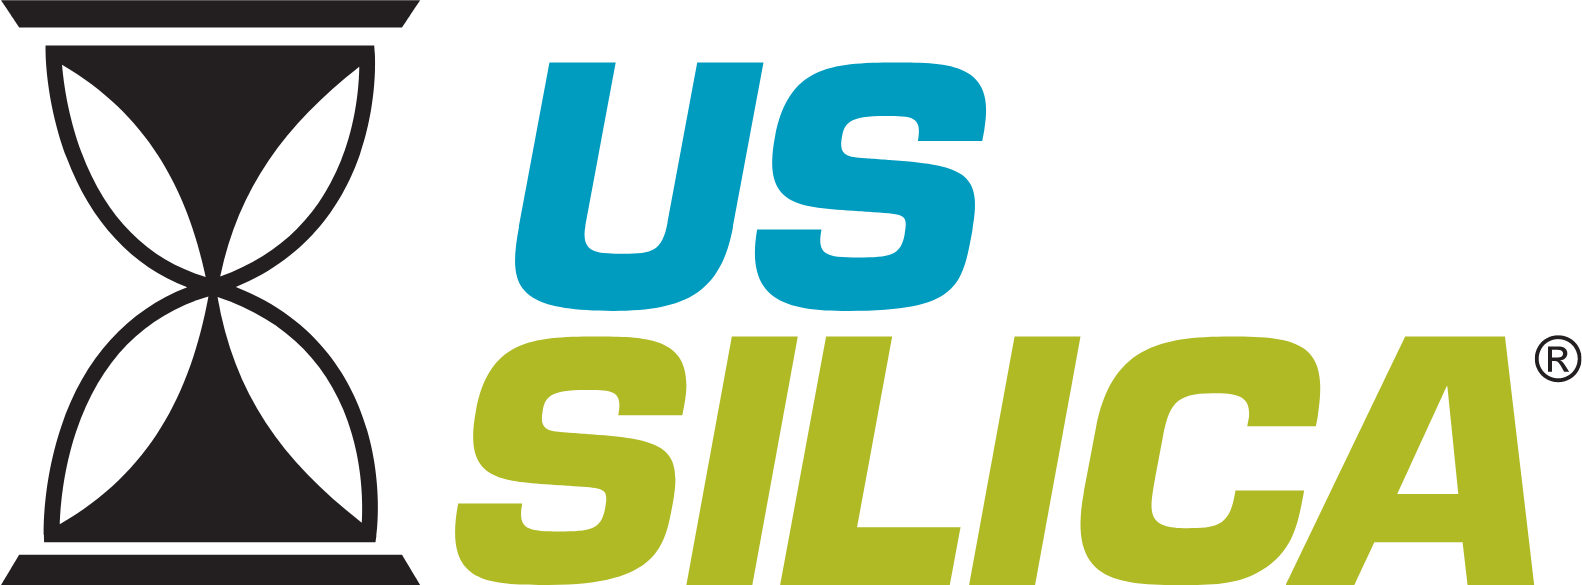 U.S. Silica logo large (transparent PNG)